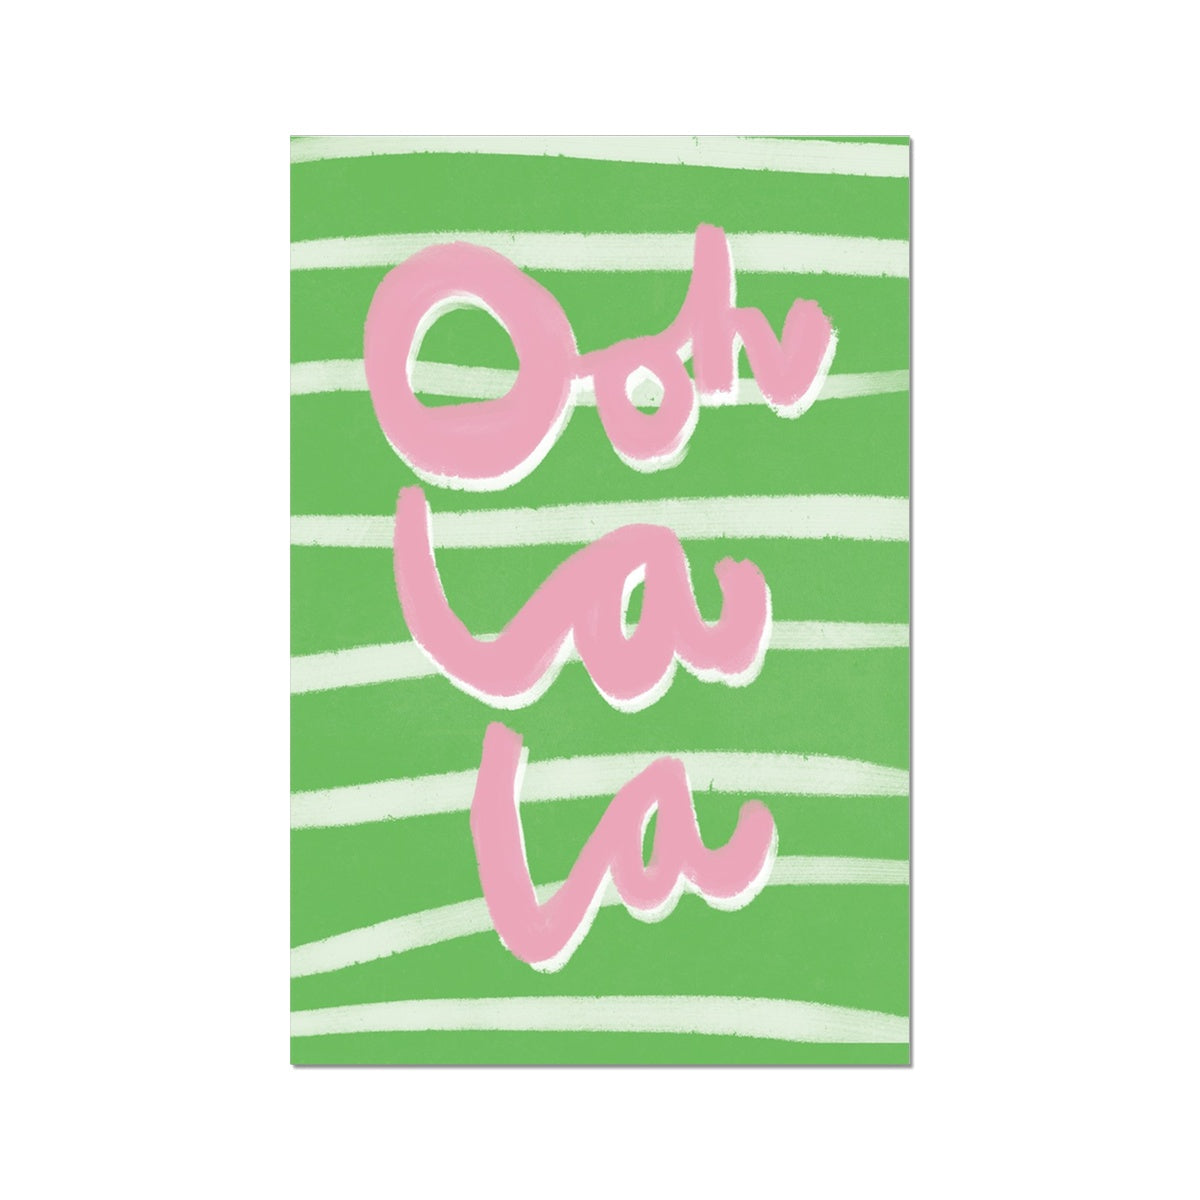 Ooh La La Art Print - Green, White and Pink Fine Art Print